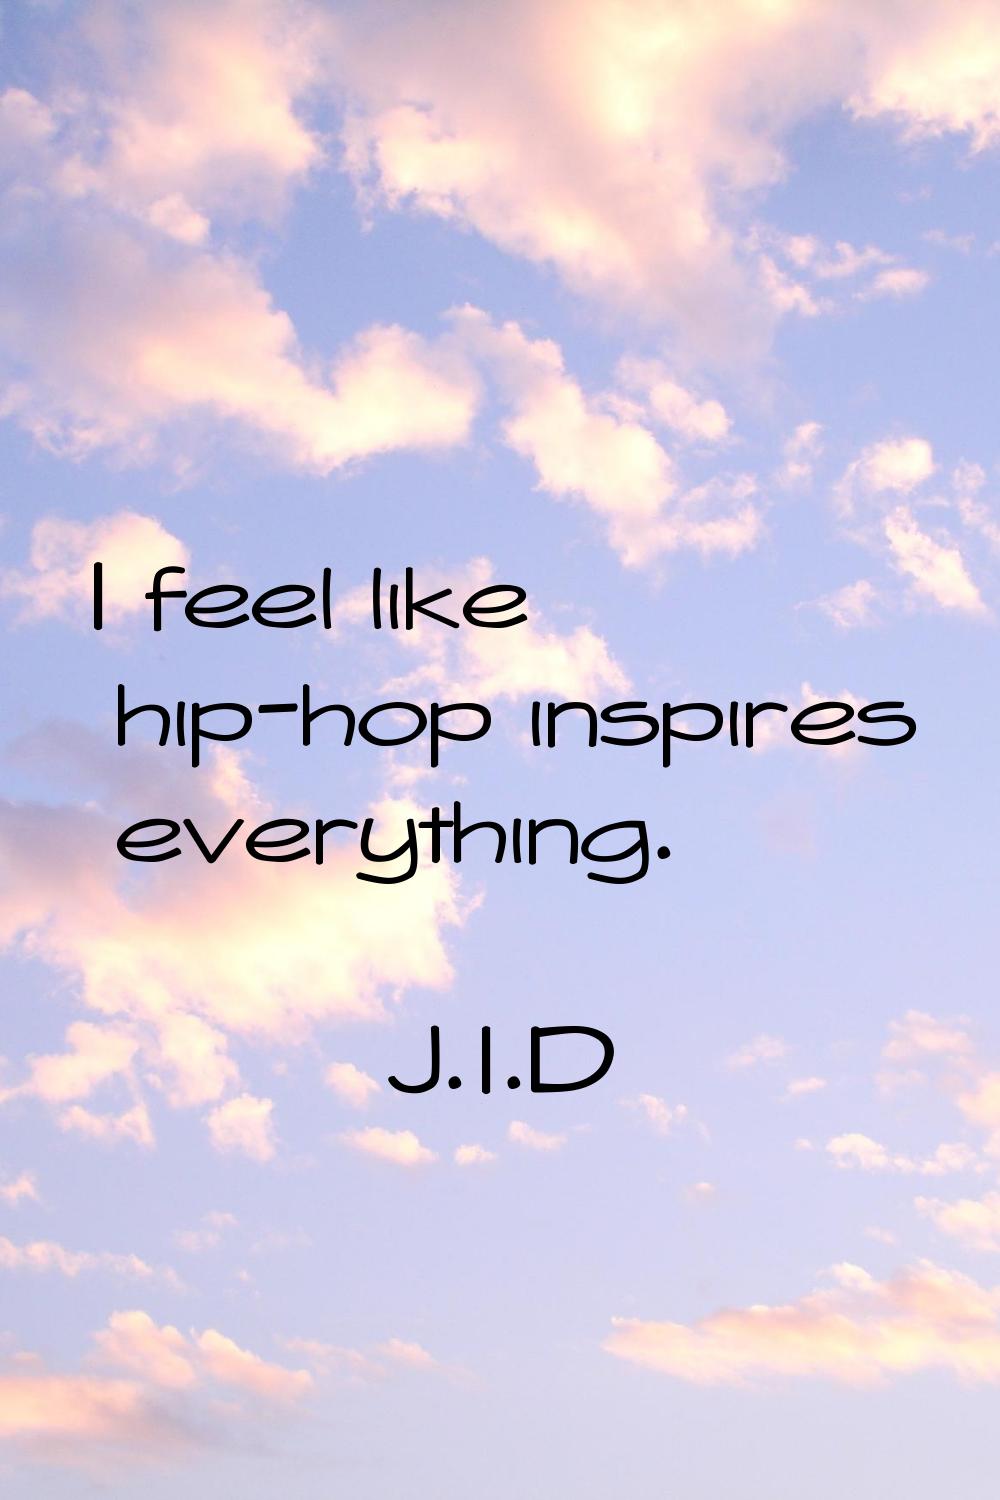 I feel like hip-hop inspires everything.